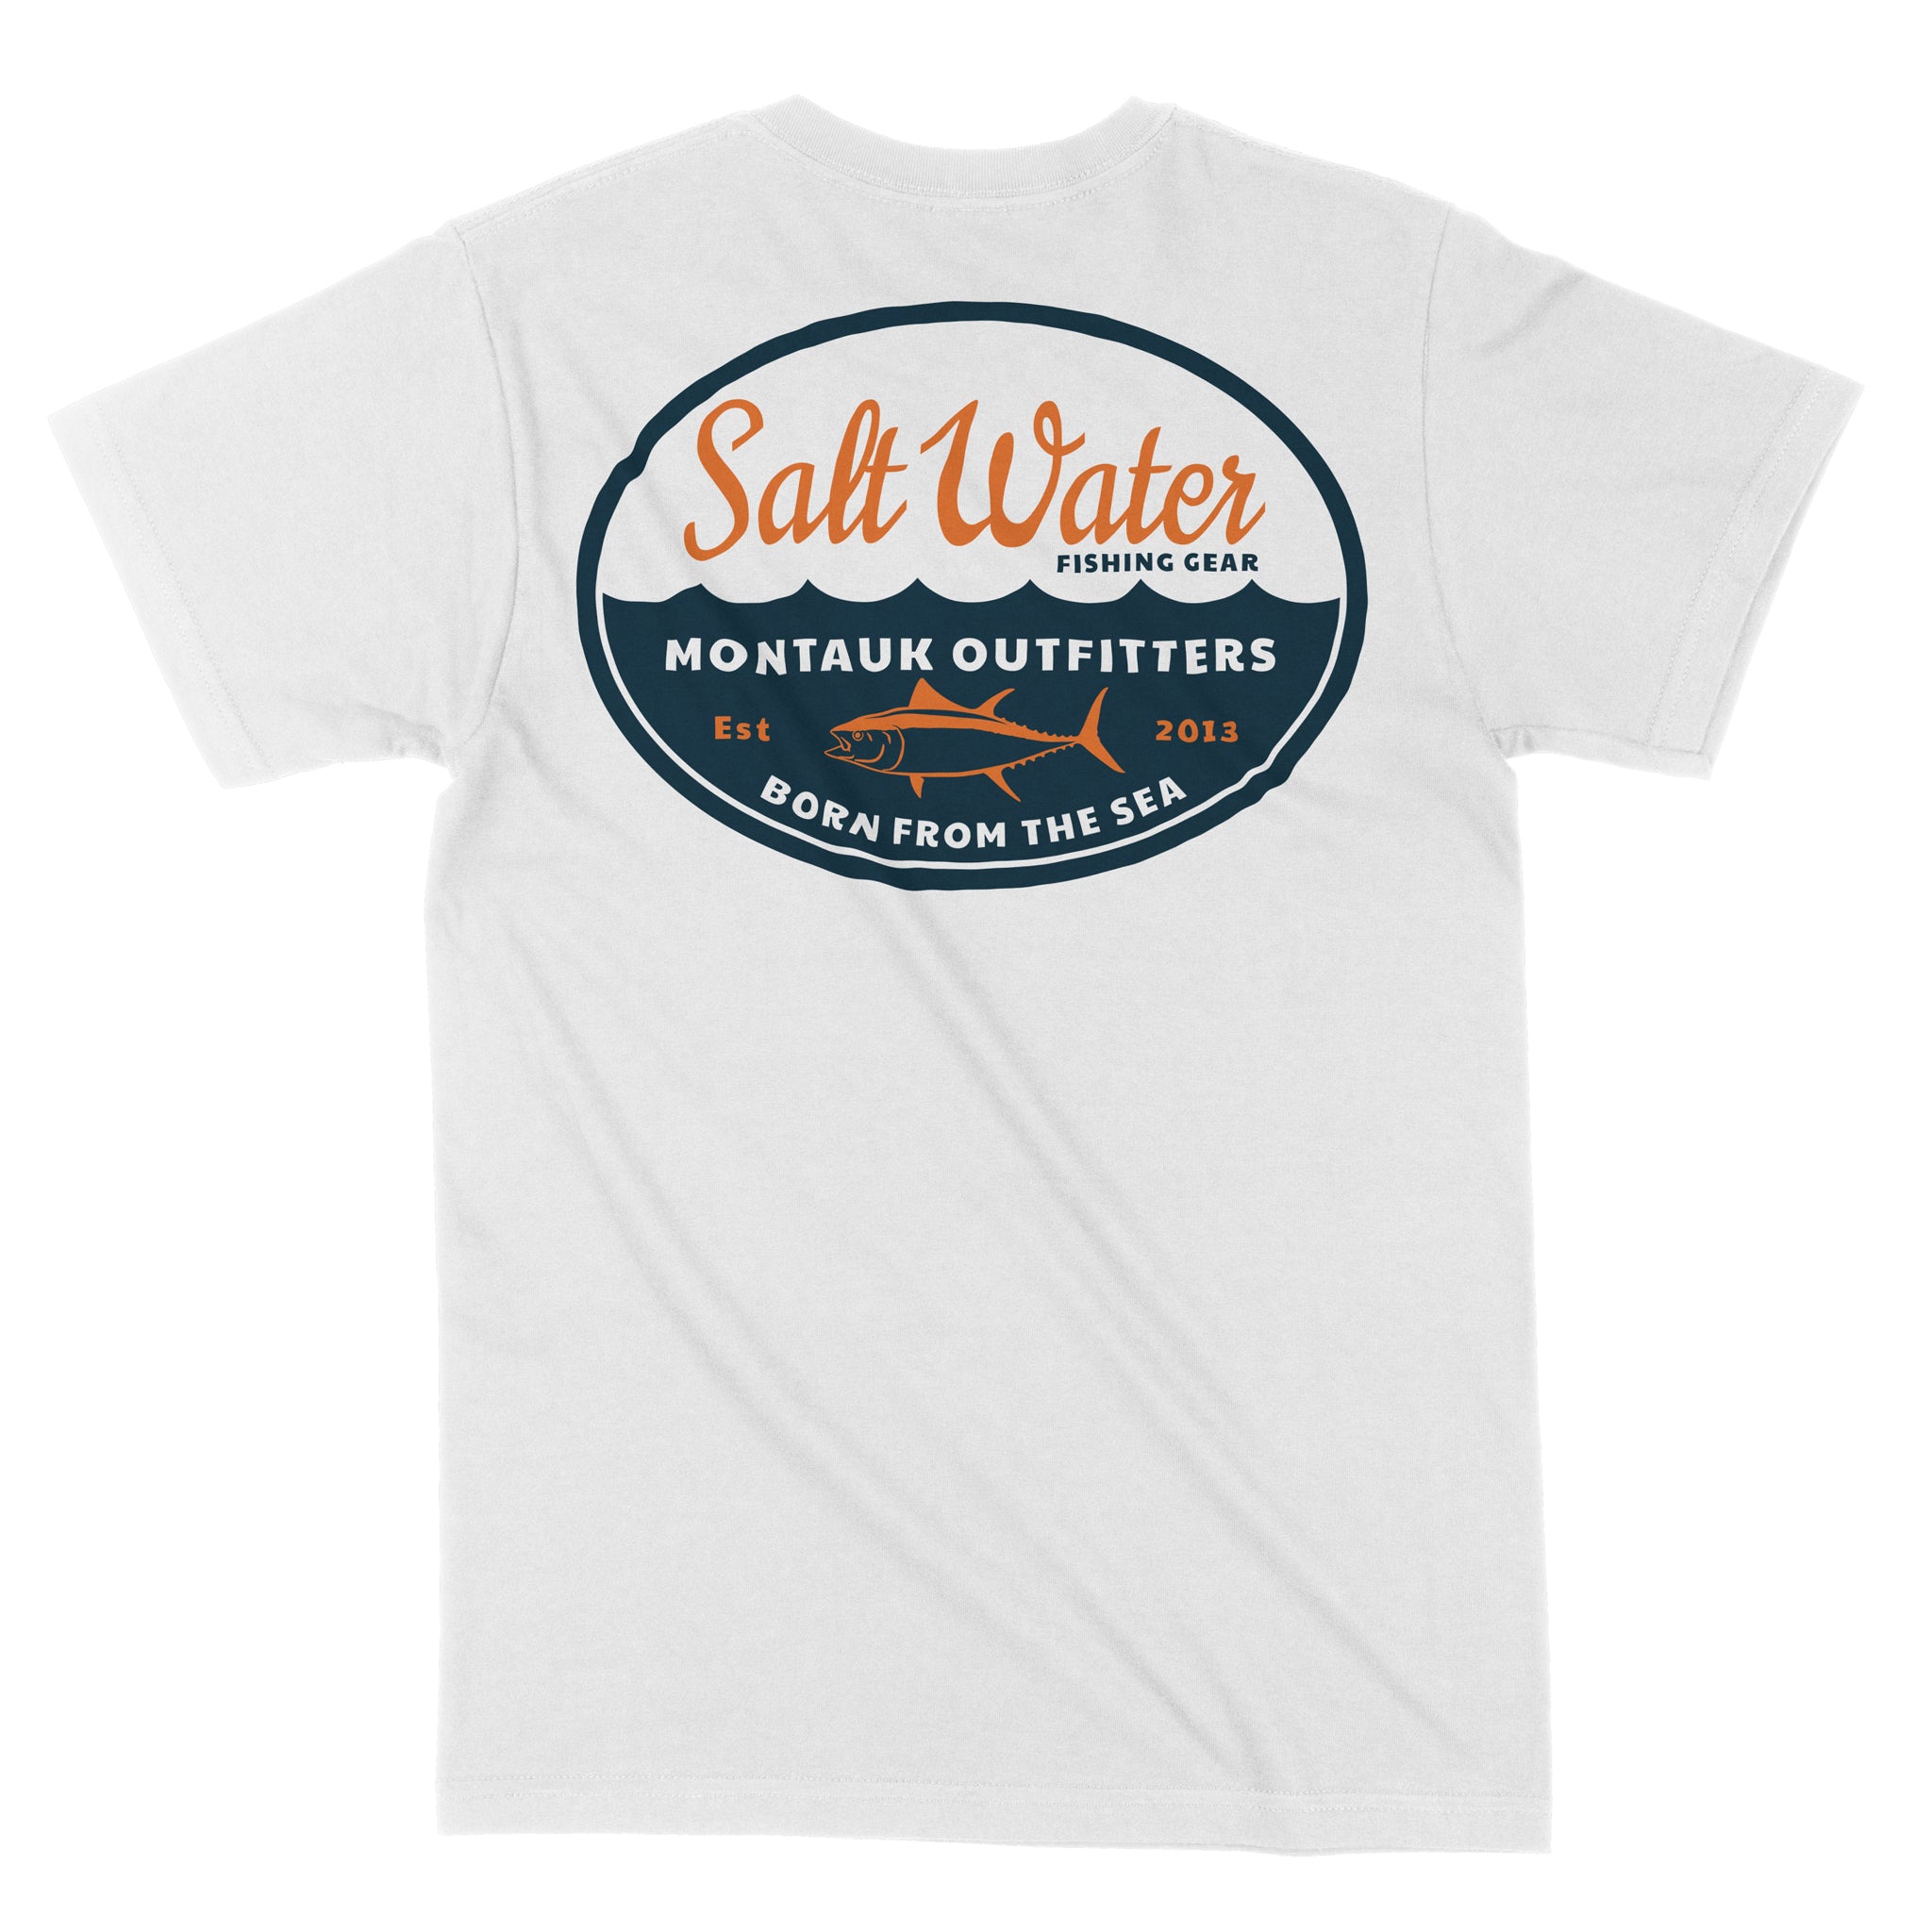 Salt Fishing Tee shirt design